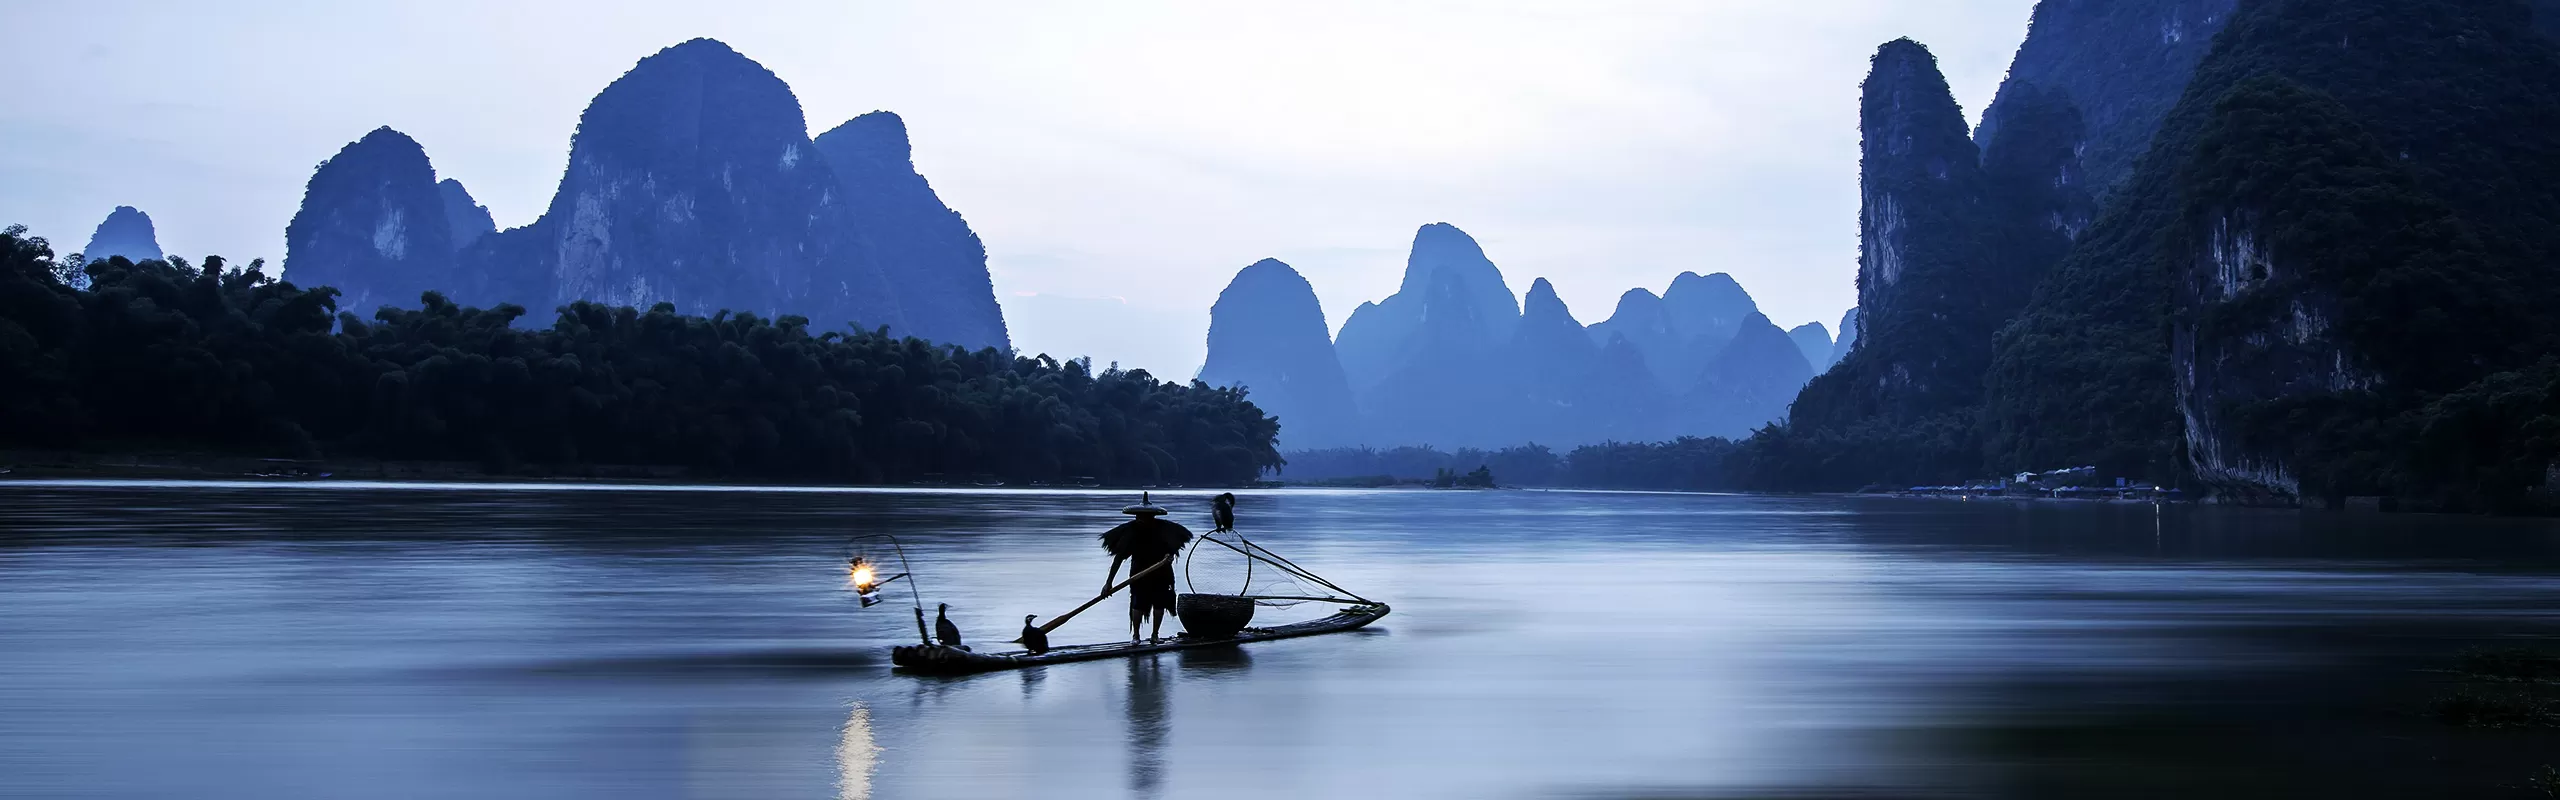 rafting tour in China